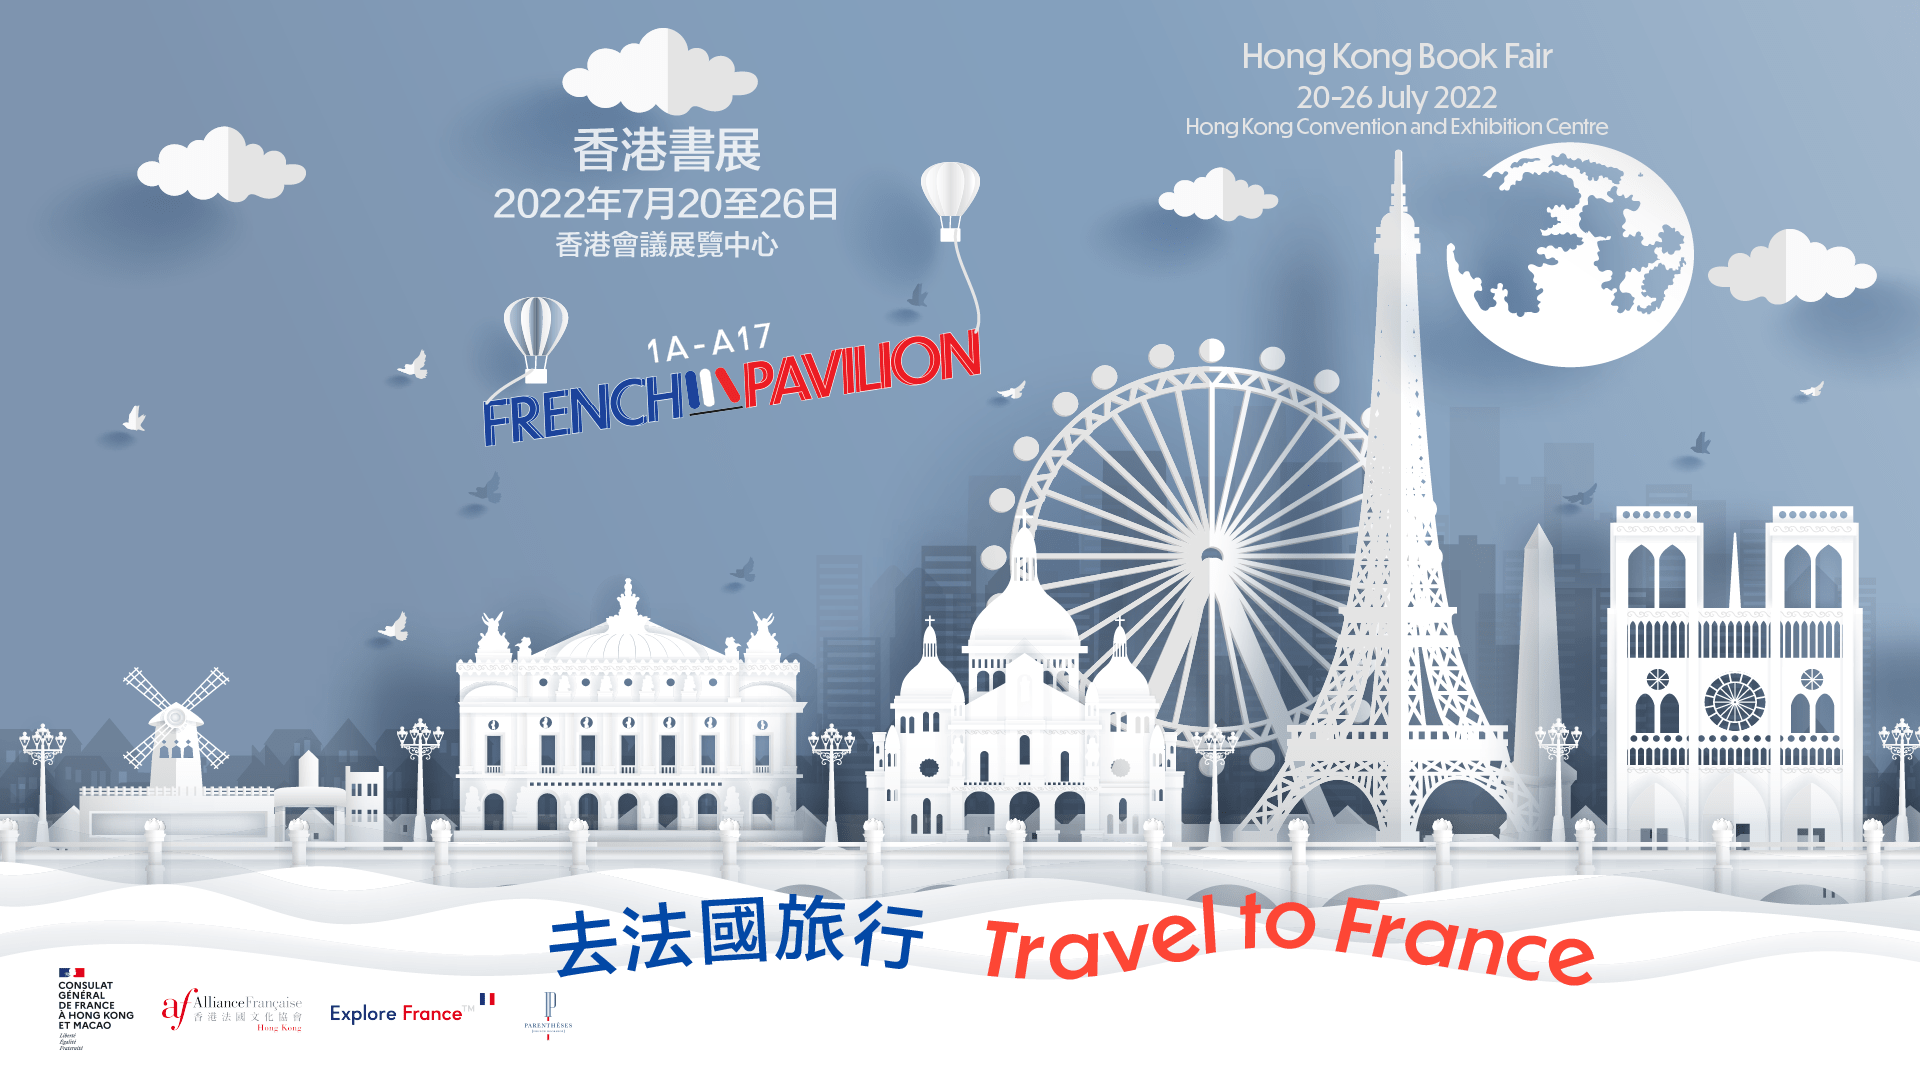 Hong Kong Book Fair 2022 - Travel to France